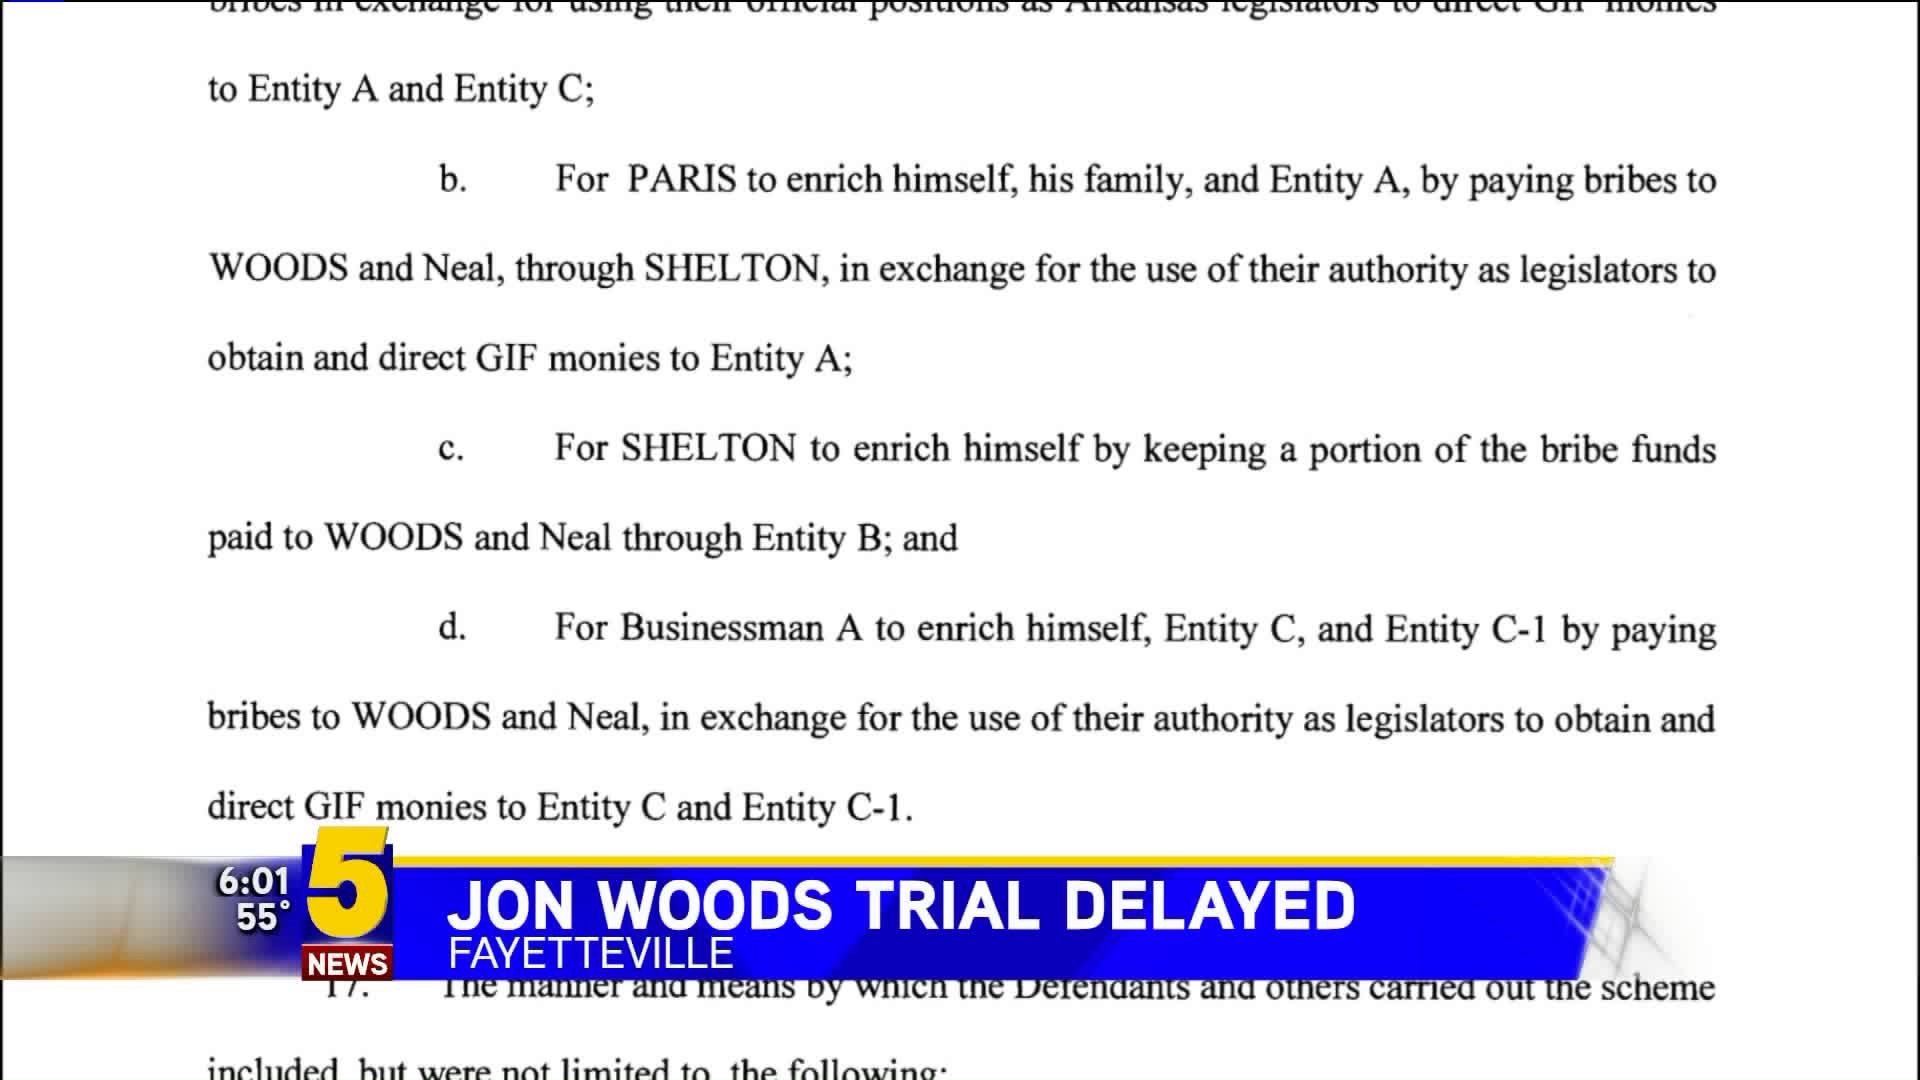 Jon Woods Trial Delayed